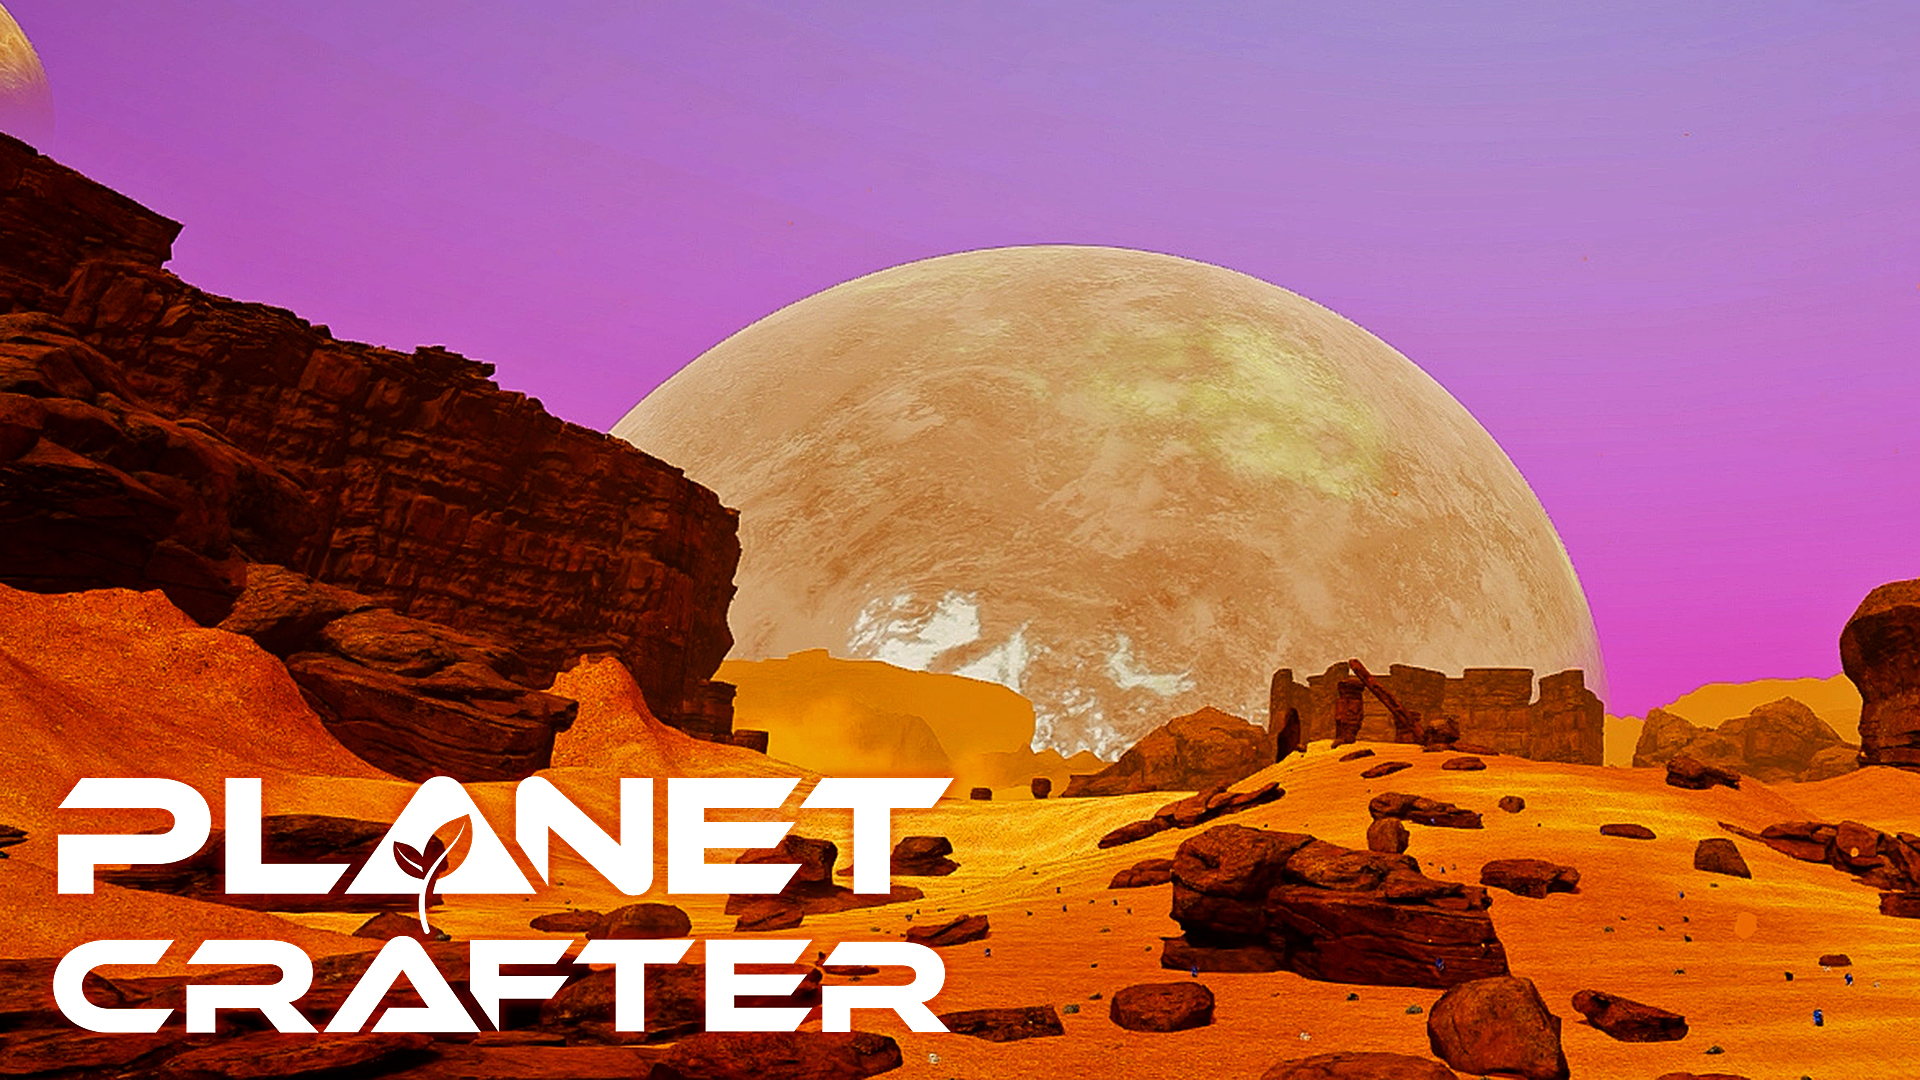 The Planet Crafter алюминий. The Planet Crafter: Prologue. Зе планет Крафтер Пролог. Planet Crafter базы. Игра планет крафтер